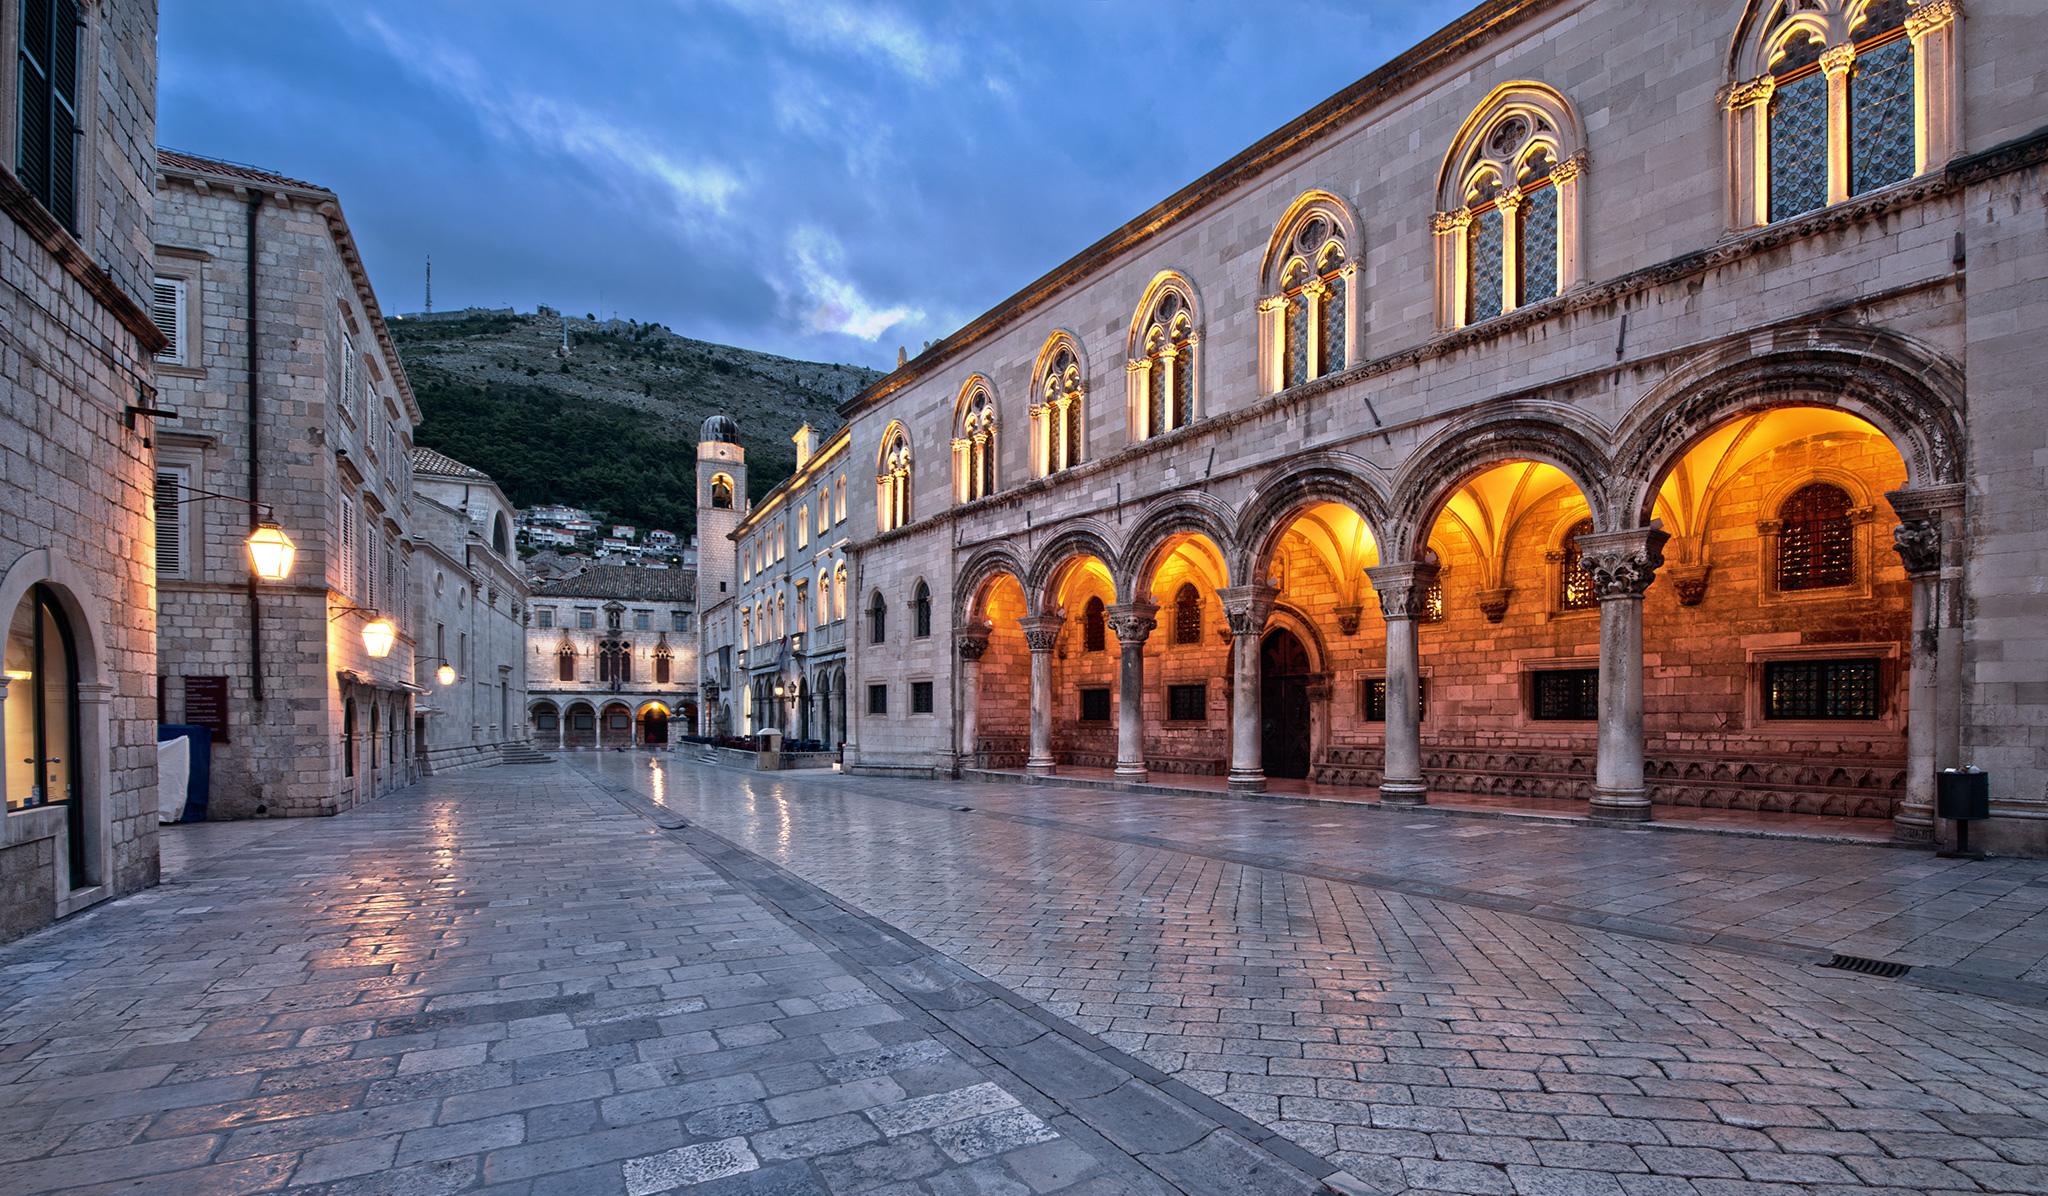 DUBROVNIK CRUCEROS CROACIA MEDITERRANEO ORIENTAL CRUCEROS ISLAS DALMATAS CROACIA CROATIA CRUISES #Dubrovnik #Croacia #Croatia #DubrovnikCruises